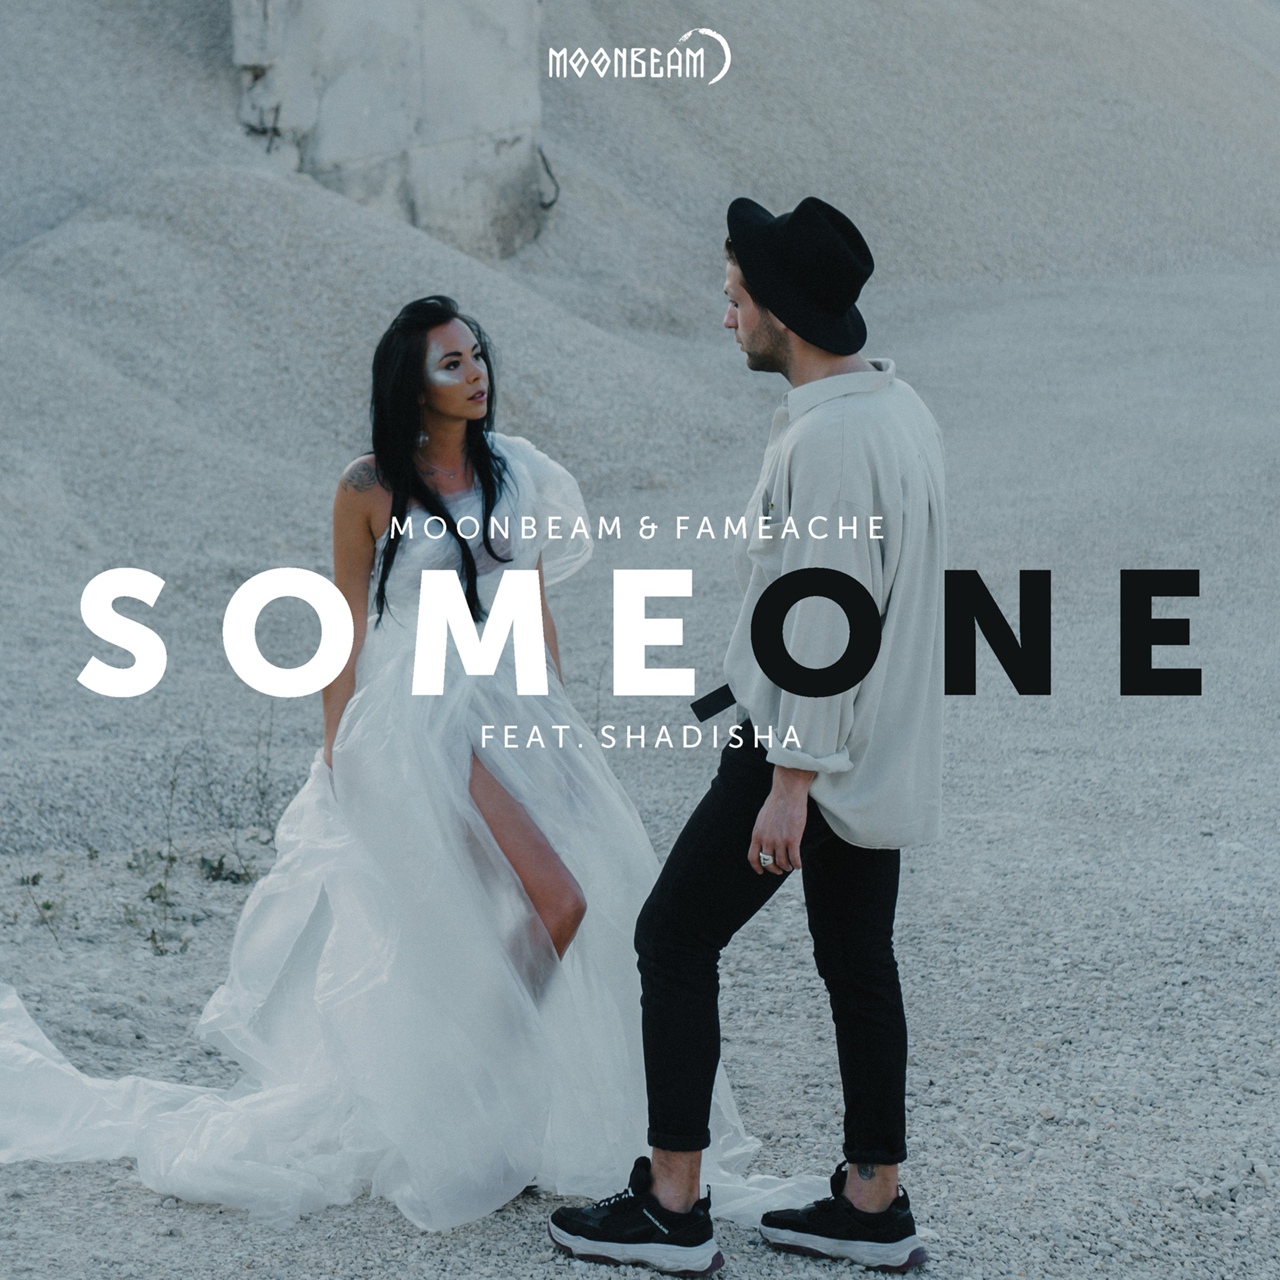 Moonbeam & Fameache featuring Shadisha — Someone cover artwork